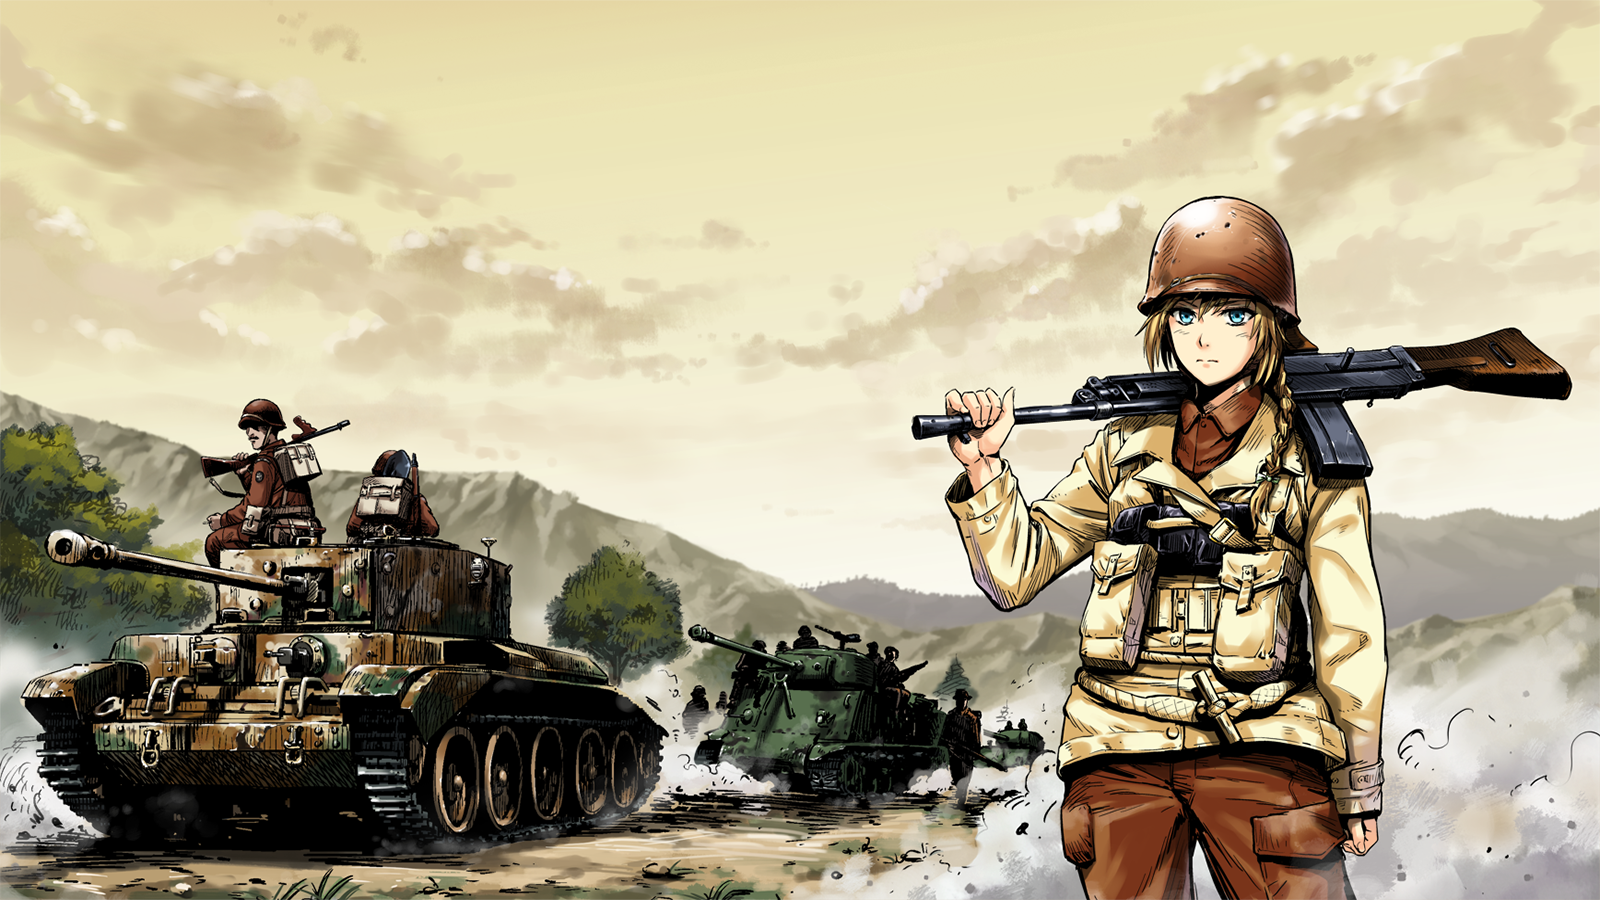 Anime 1600x900 anime girls with guns World War II anime girls helmet tank sky clouds uniform gun girls with guns standing looking at viewer smoke braids military vehicle